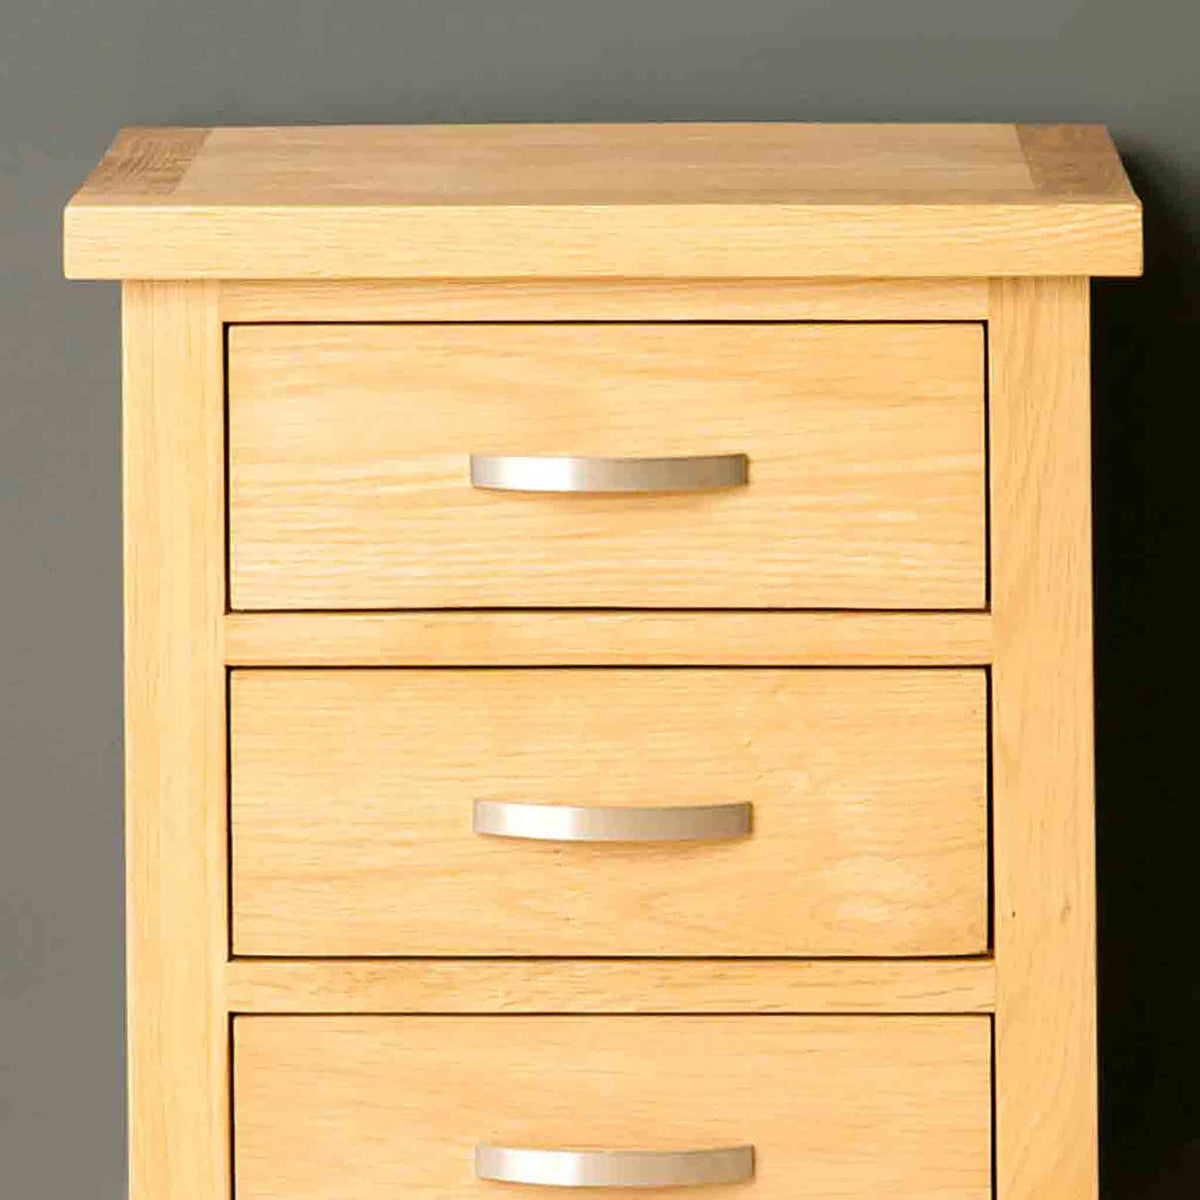 London Oak Bedside Chest - Close up of drawer fronts